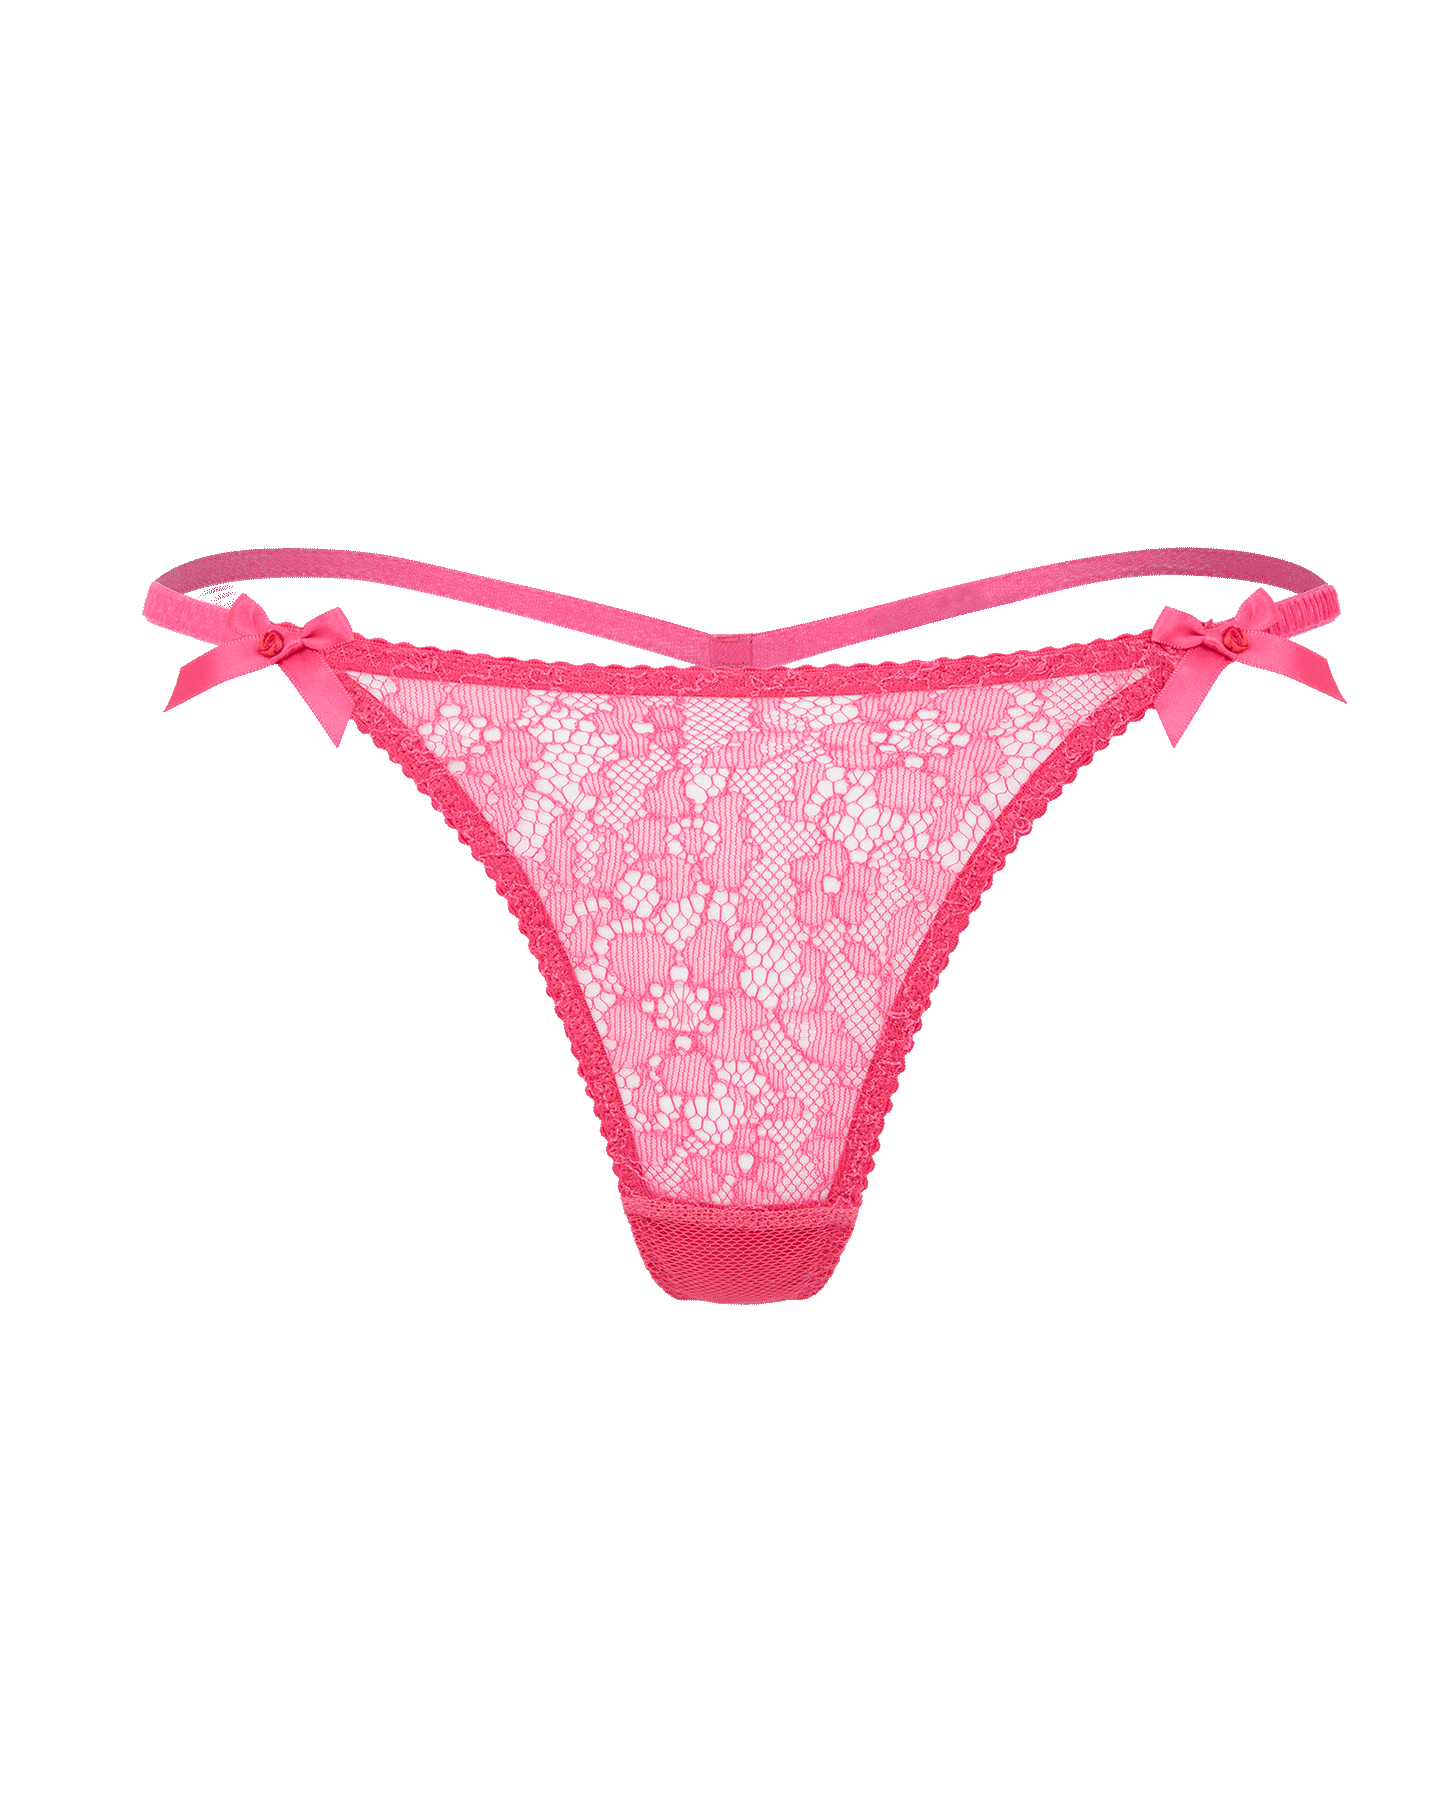 Pink Blush Fuchsia Lace Thong Panties Sheer G-String Lingerie Underwear OS  S M